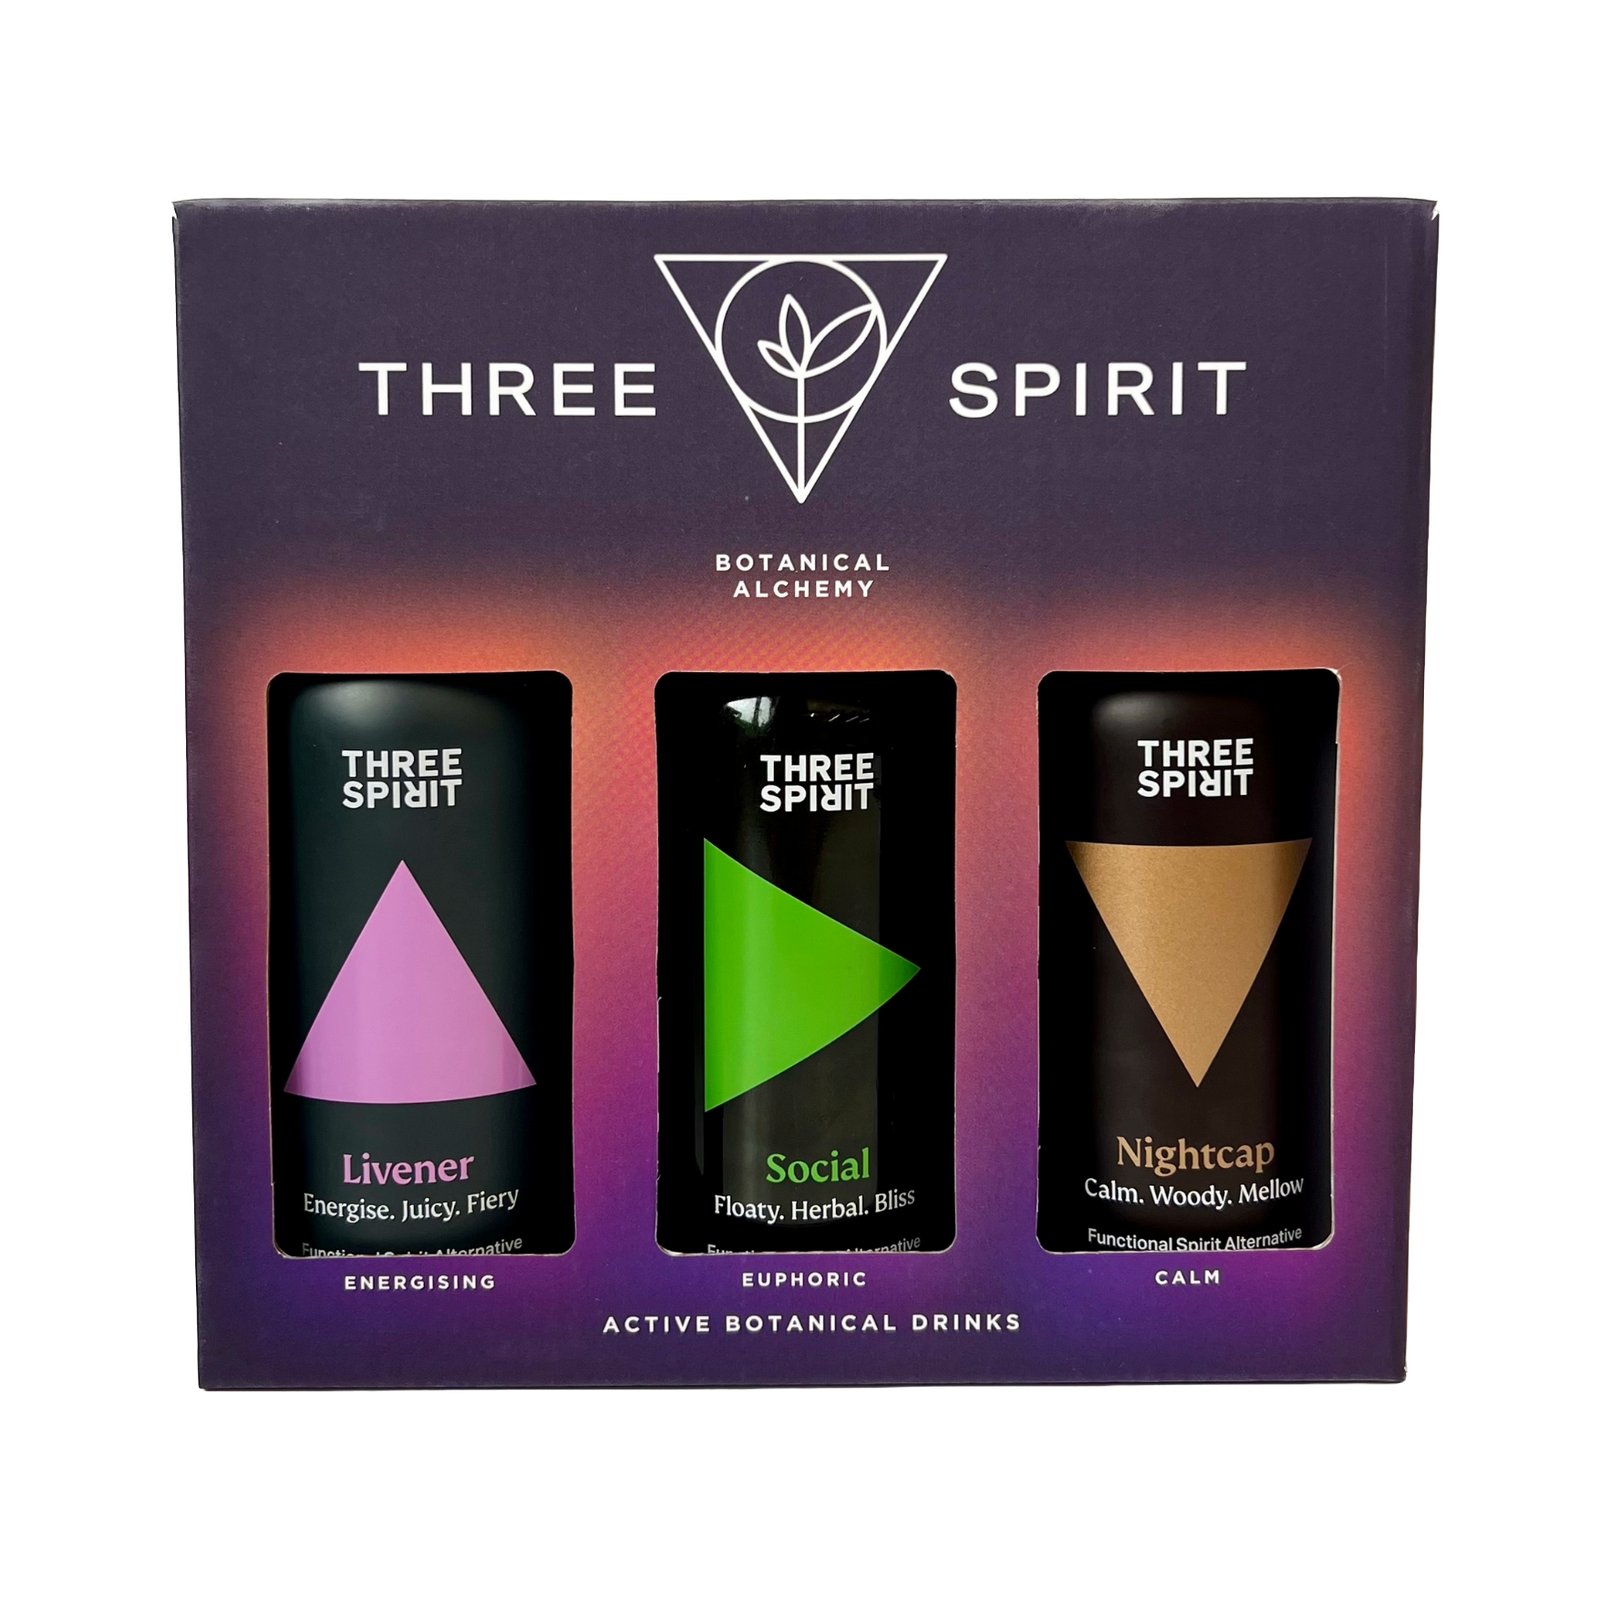 Three Spirit - Starter Pack